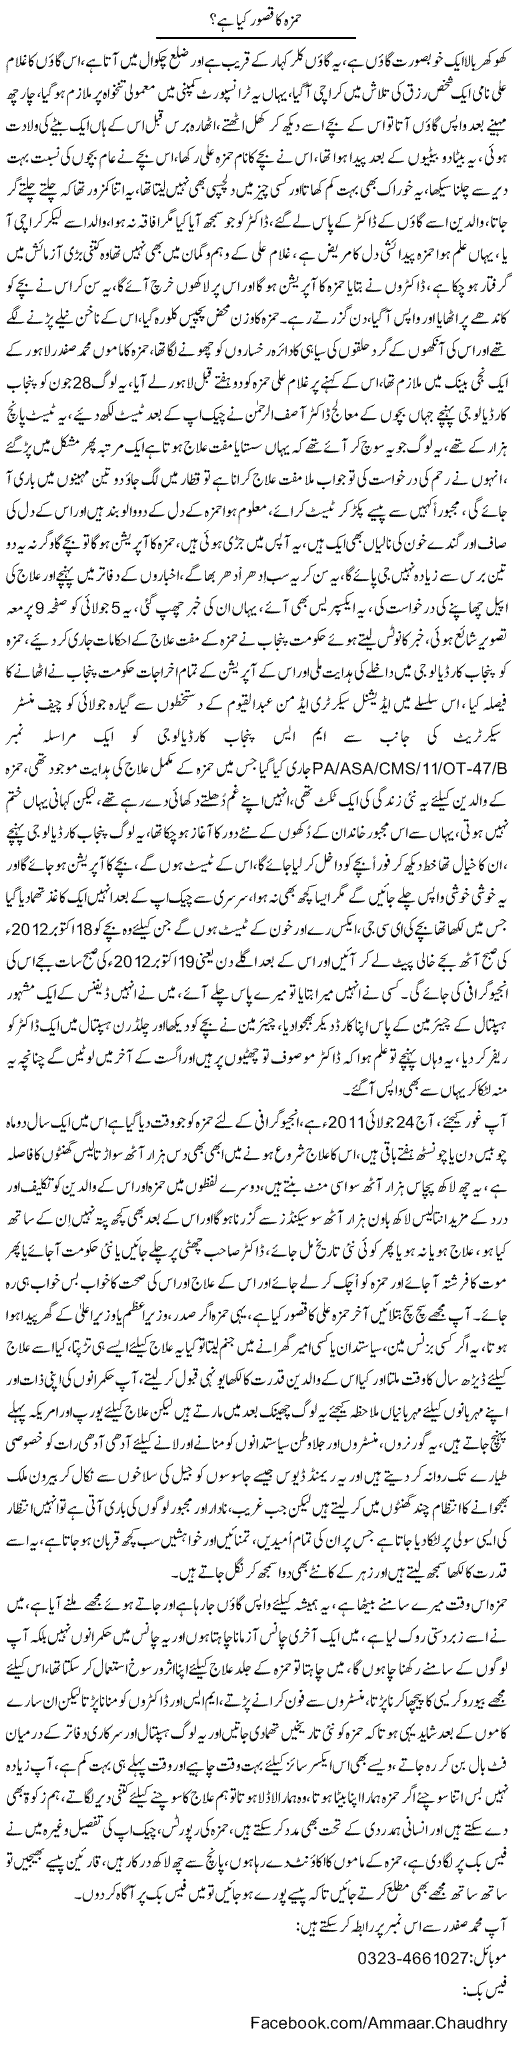 Innocent Hamza Express Column Amad Chaudhry 24 July 2011